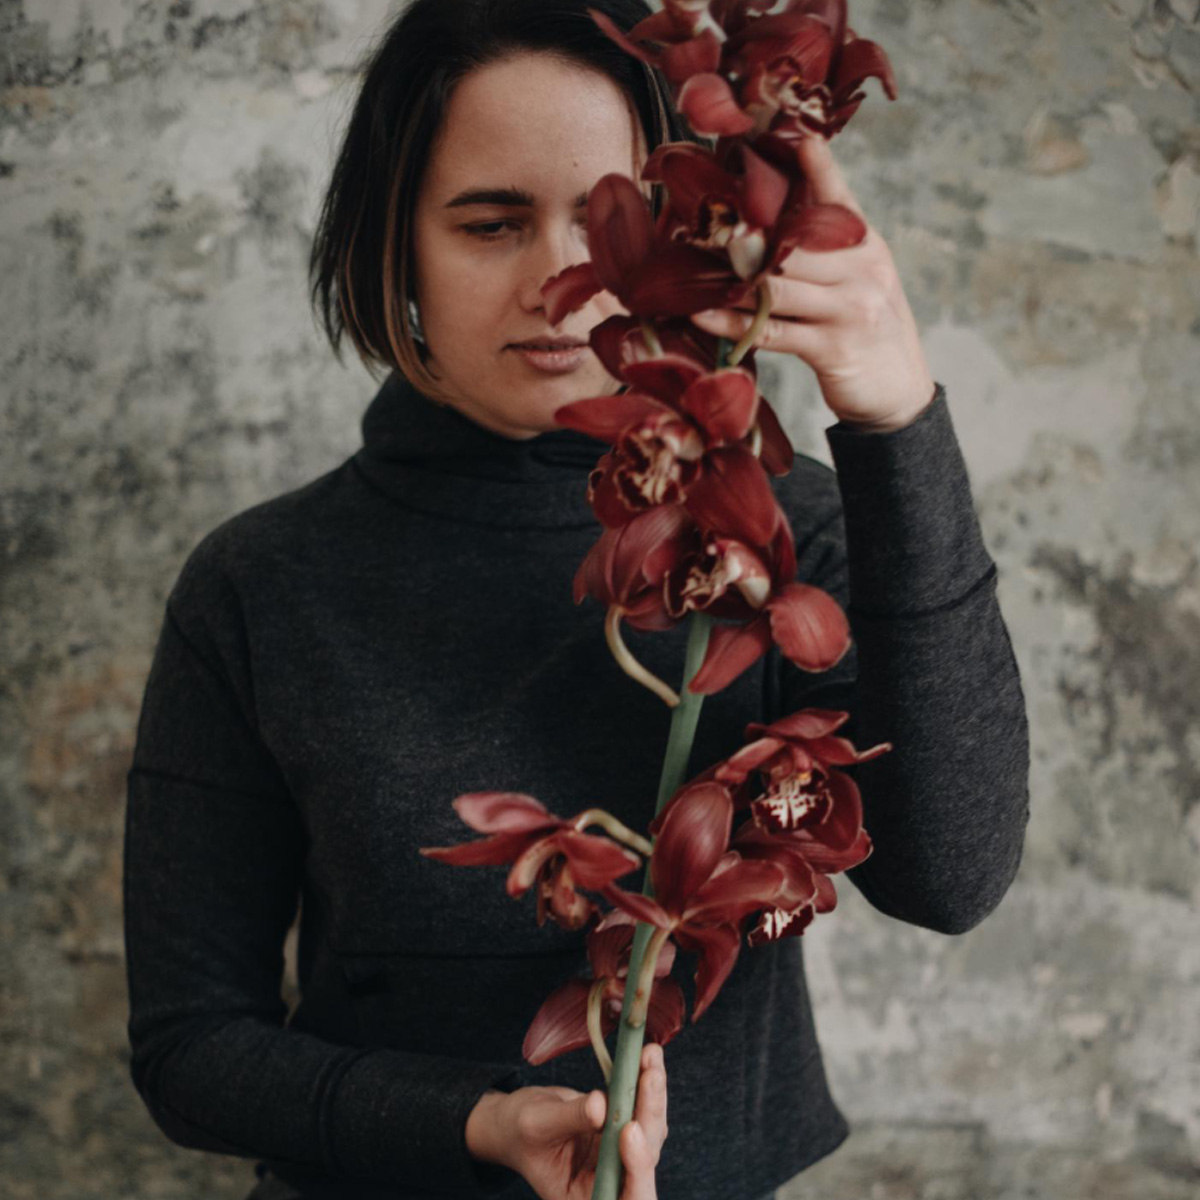 Khrystyna Didukh floral designer - on Thursd